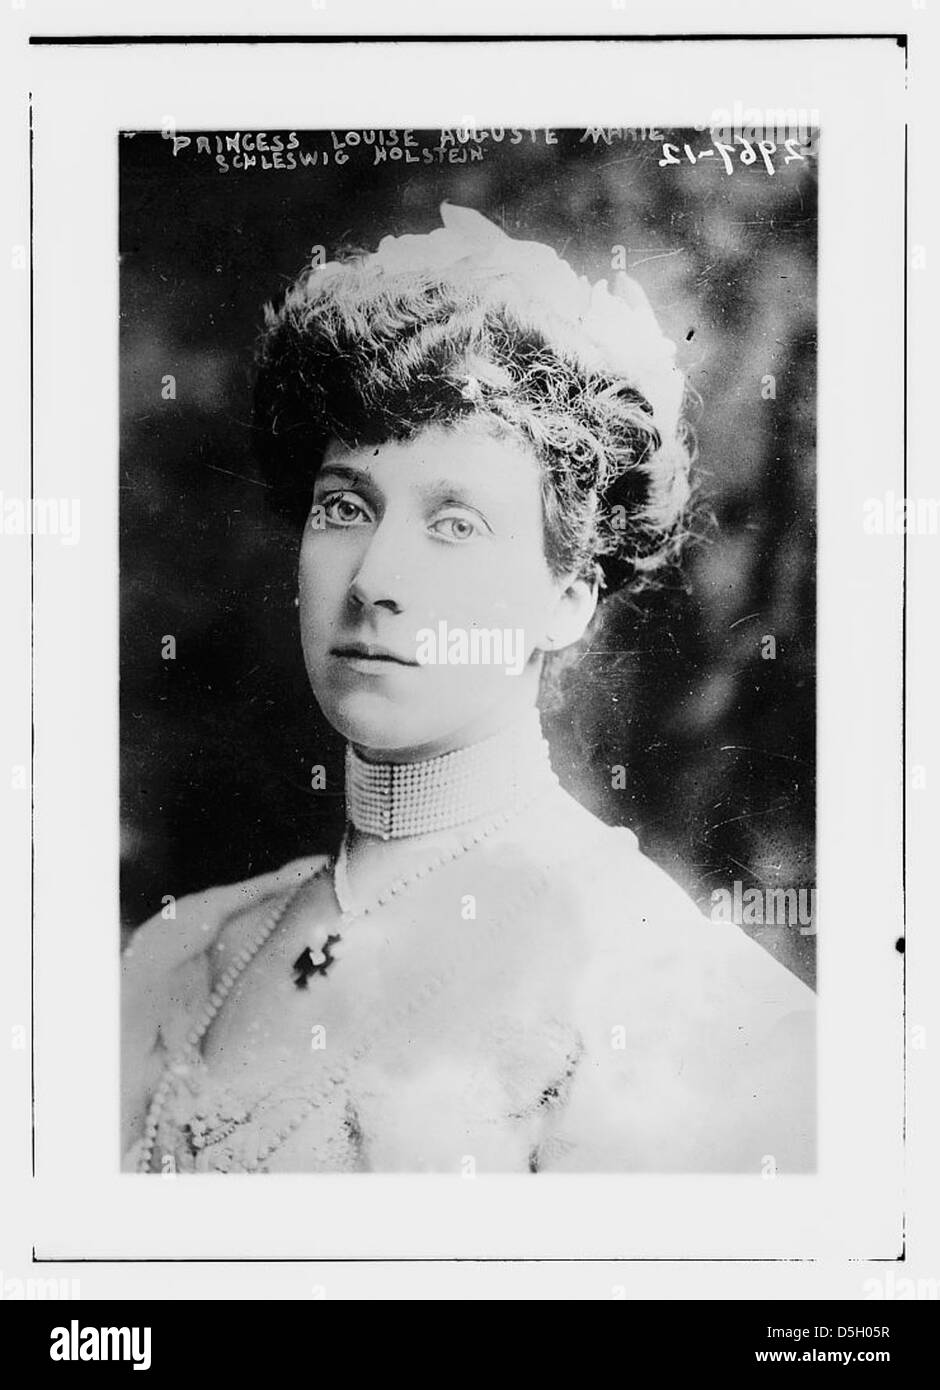 La princesa Luisa Auguste de Schleswig Holstein (LOC) Foto de stock